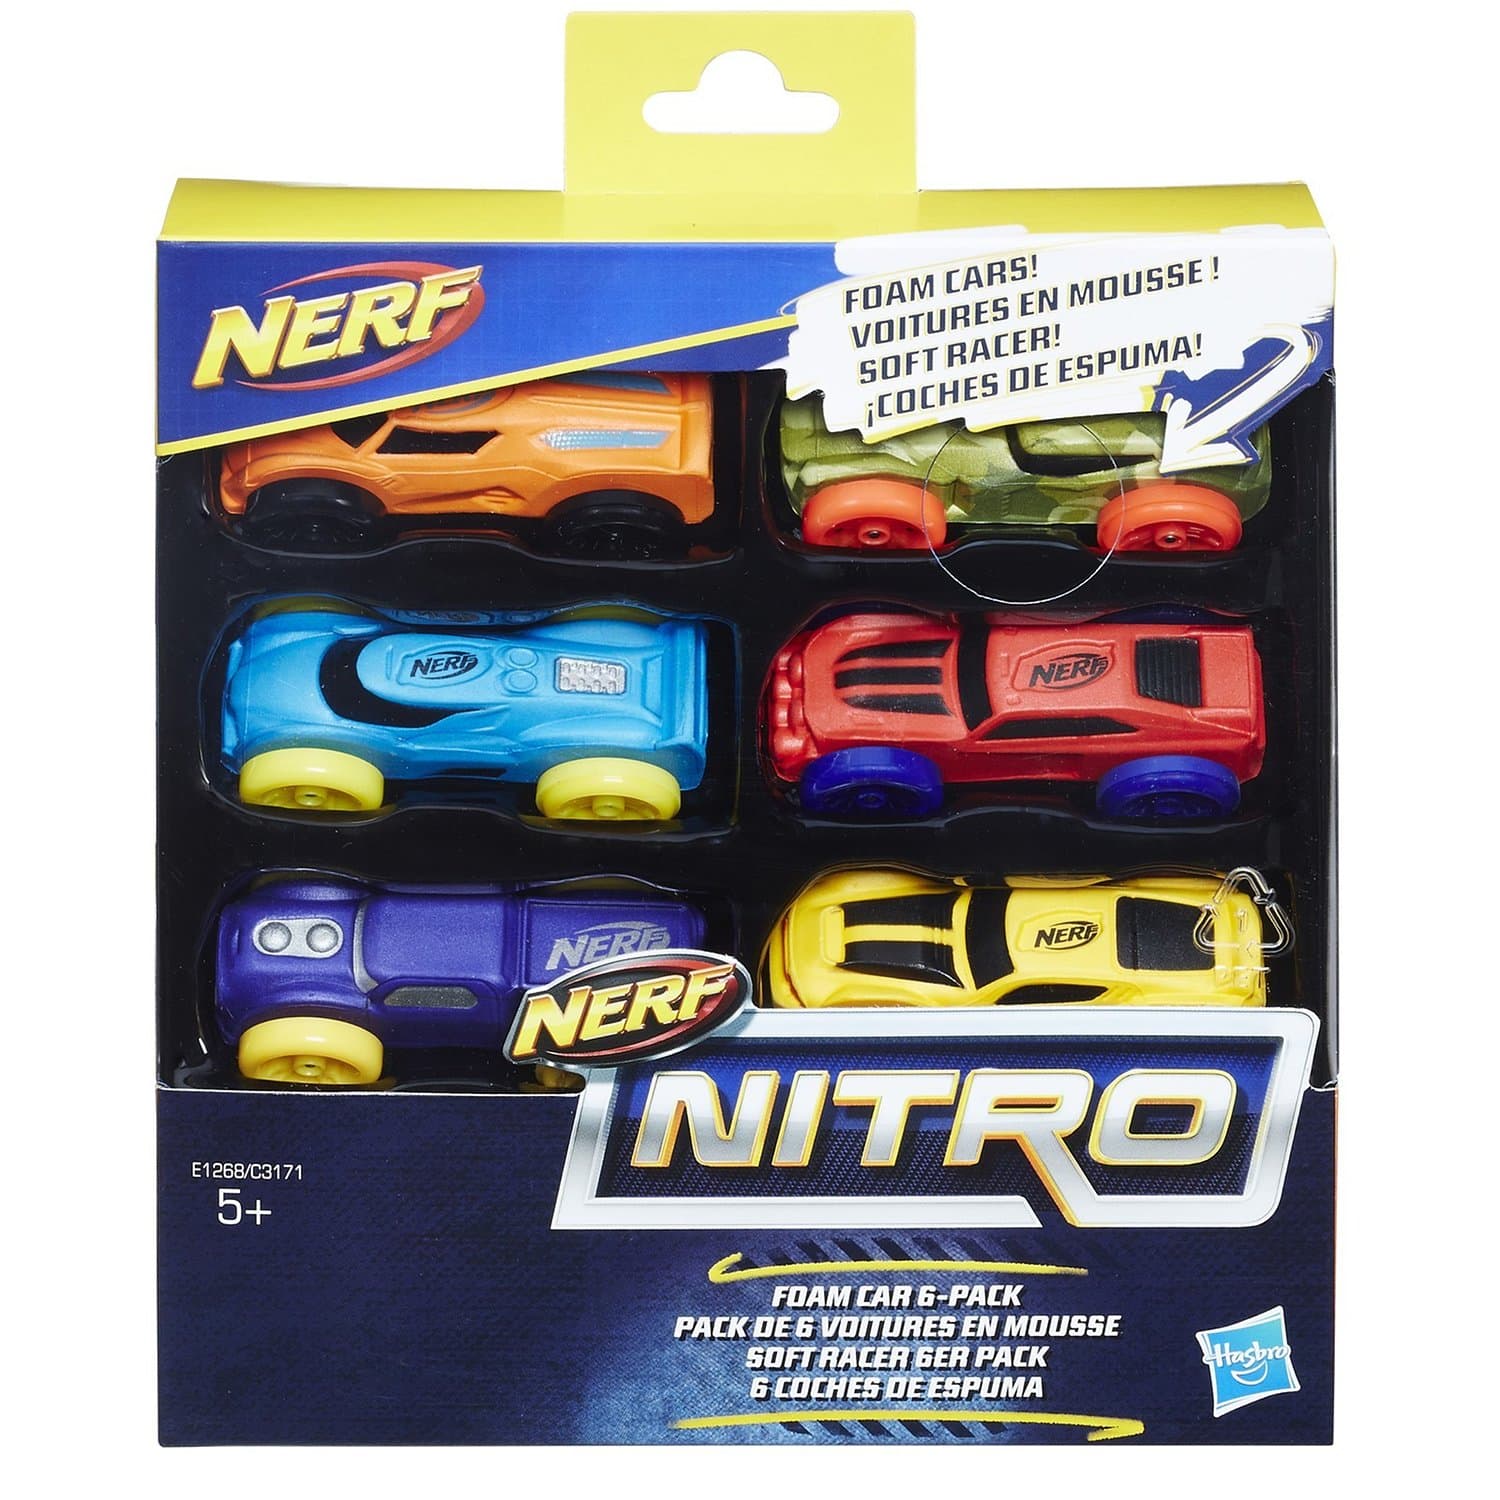 Машинки НЕРФ Нитро 6 шт. за 1 шт. (Nerf Nitro set of 6 cars) C3171EU4 Hasbro